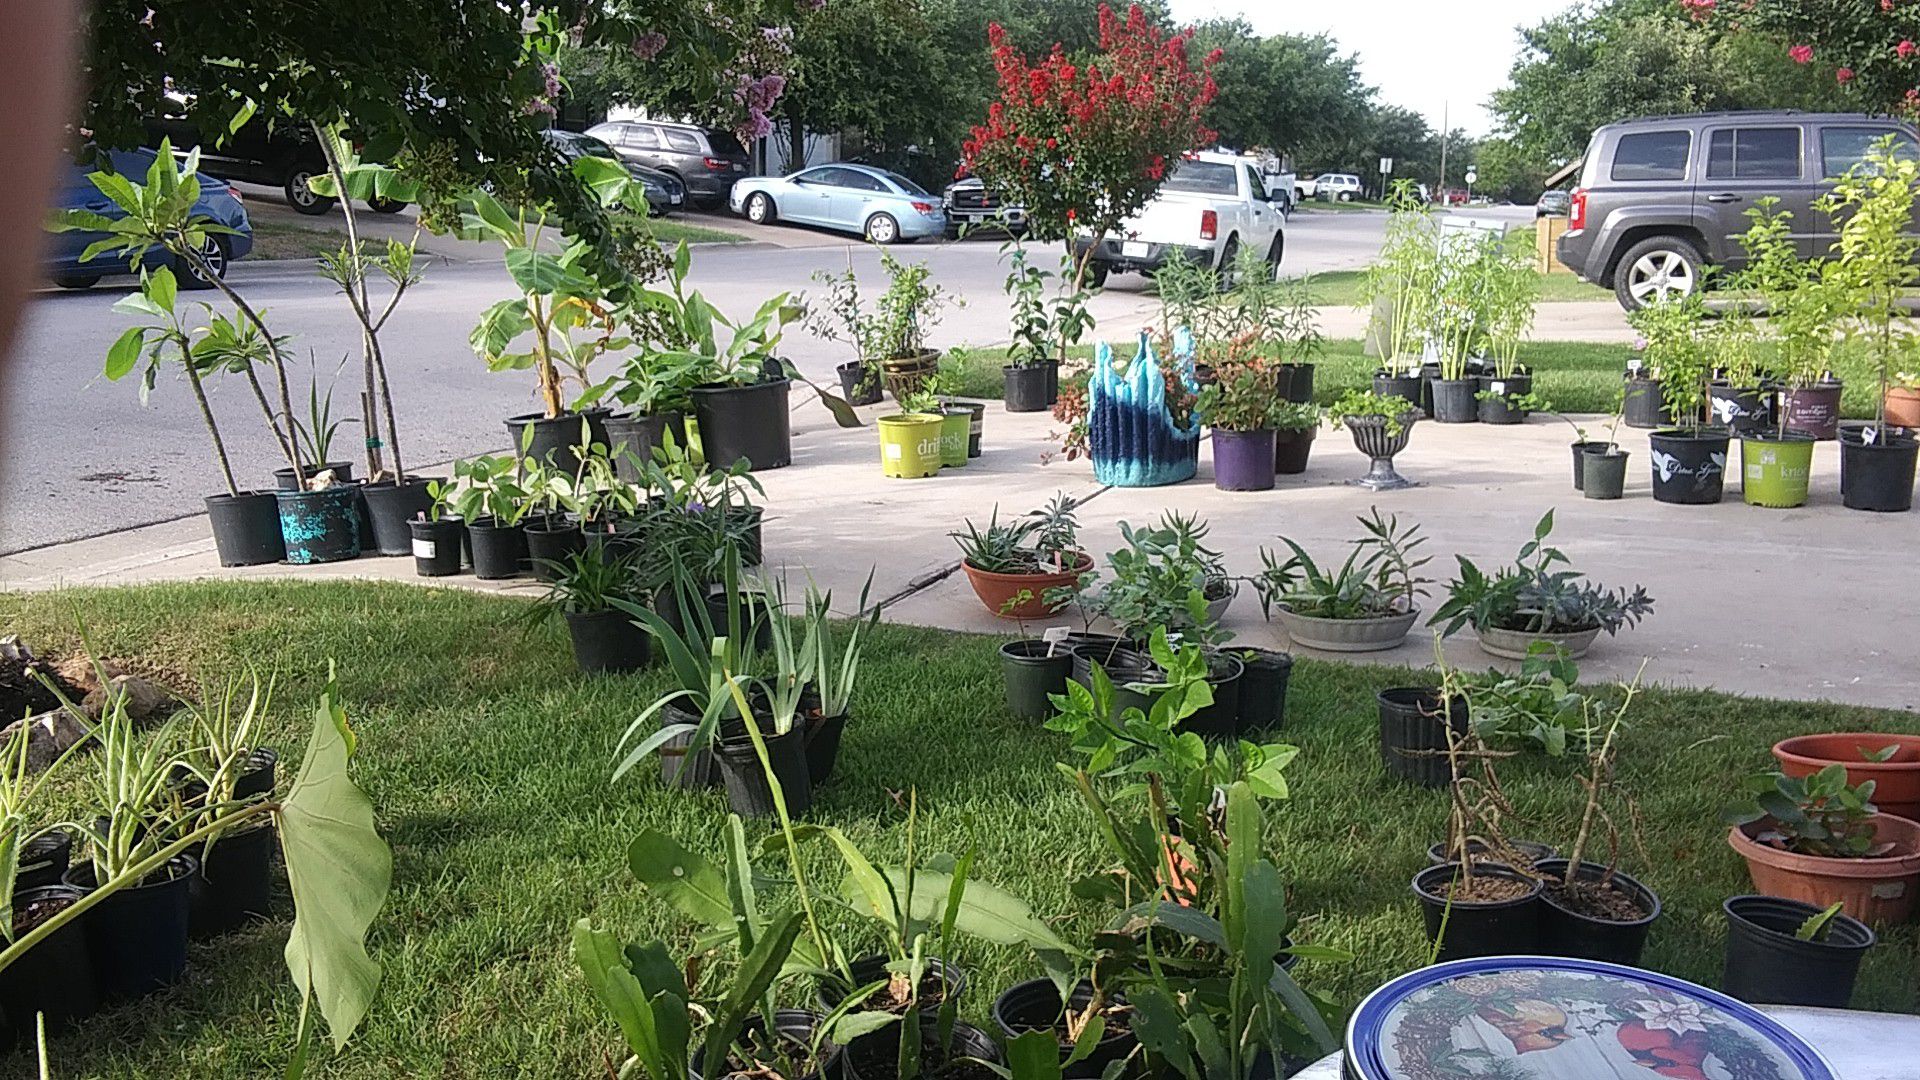 Plant sale today